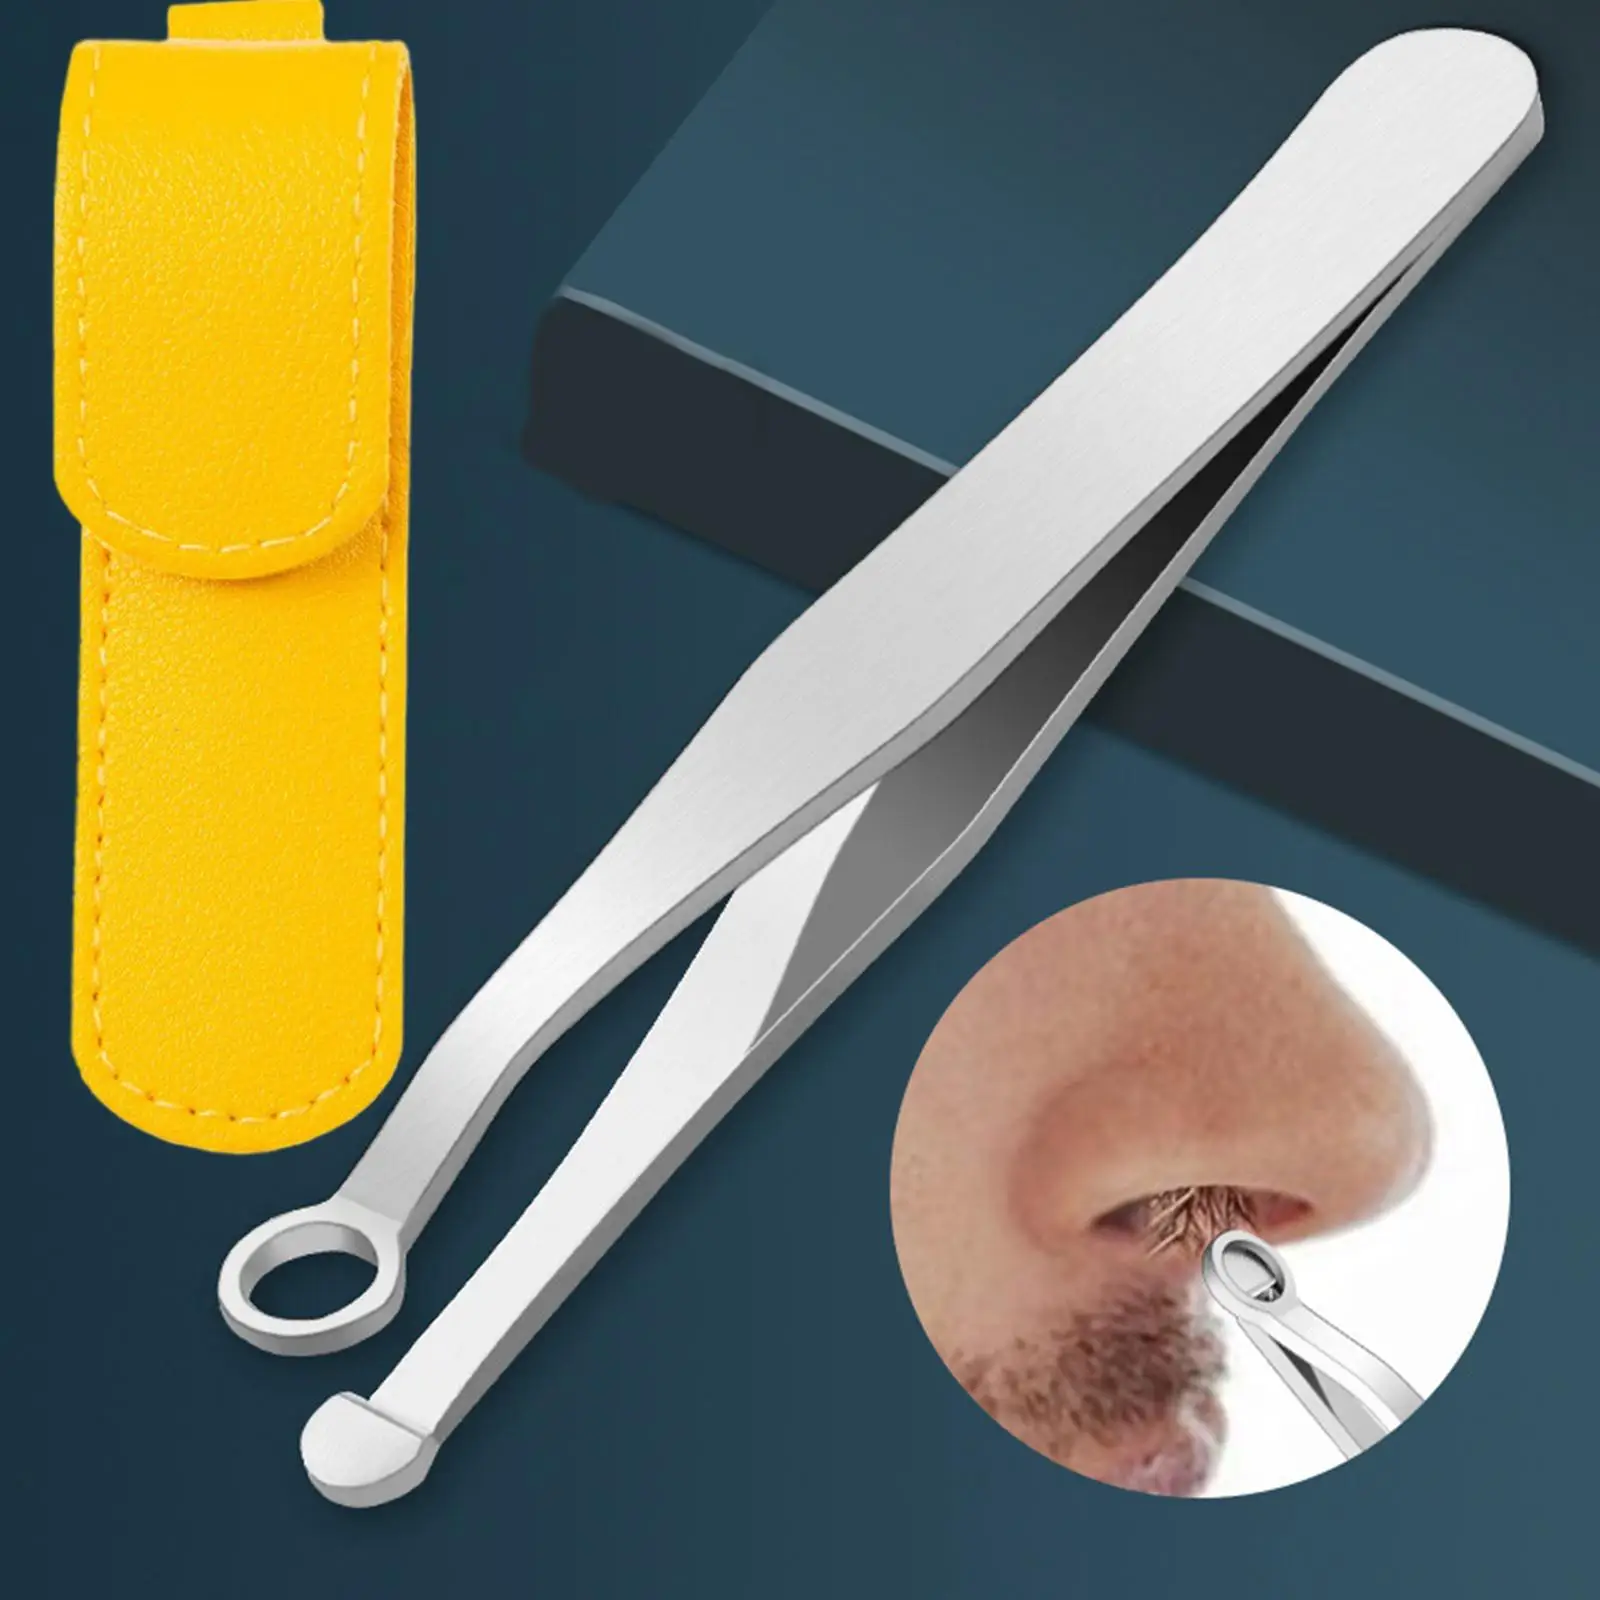 Nose Hair Tweezers Stainless Steel Round Tip Trimming Tool for Body Sideburns Men Women